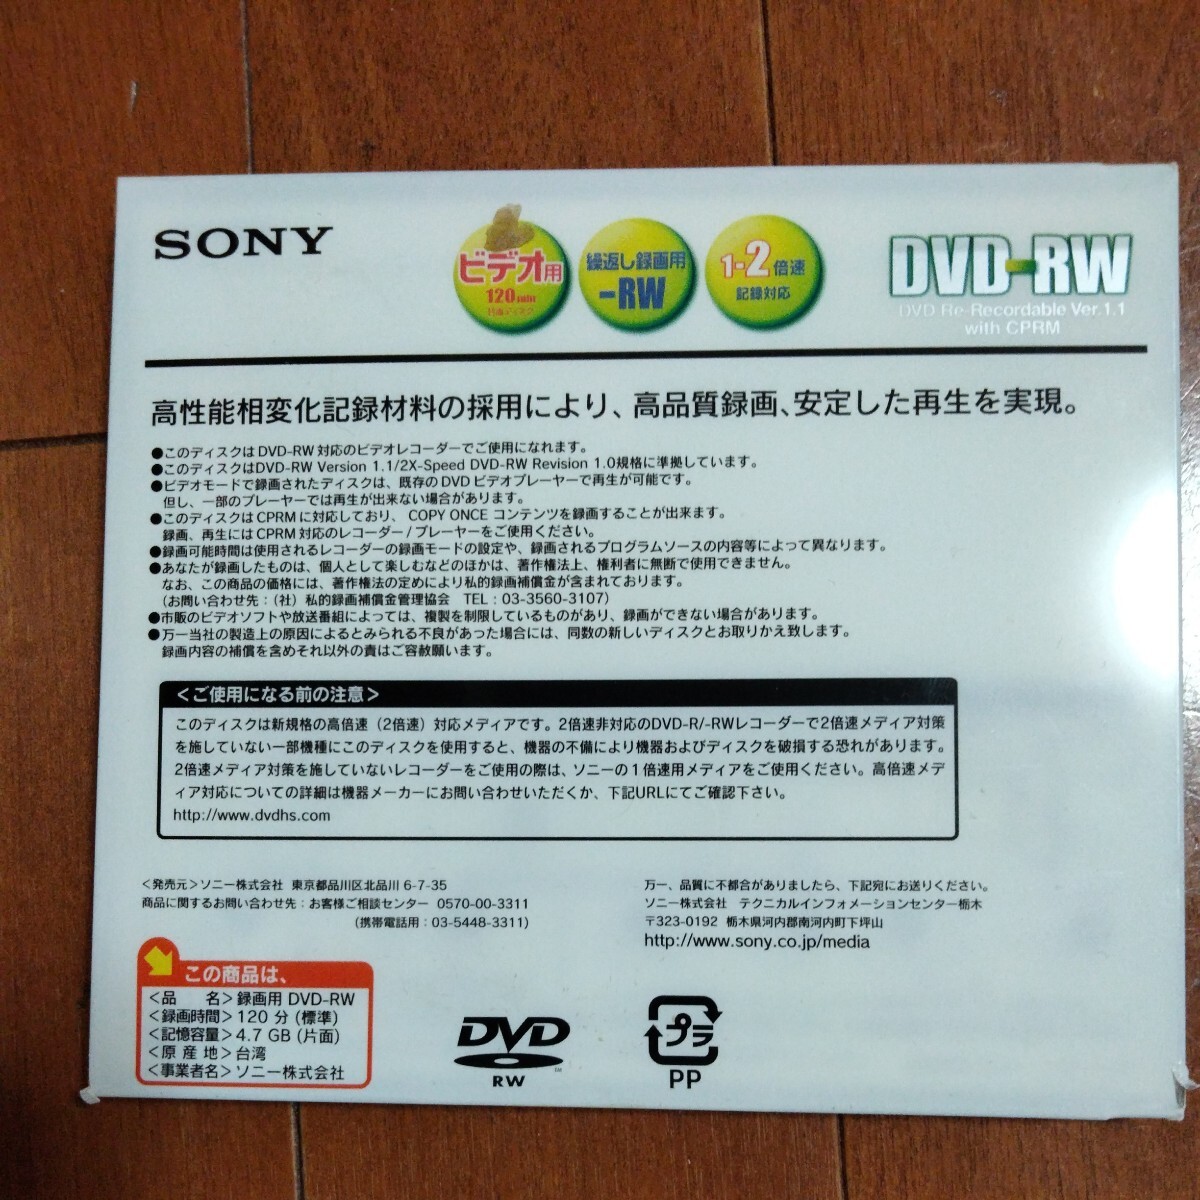 DVD-RW CPRM соответствует 13 листов.. внутри перевод FujiFilm DVD-RW 10 листов упаковка CPRM соответствует,SONY DVD-RW 3 листов CPRM соответствует 